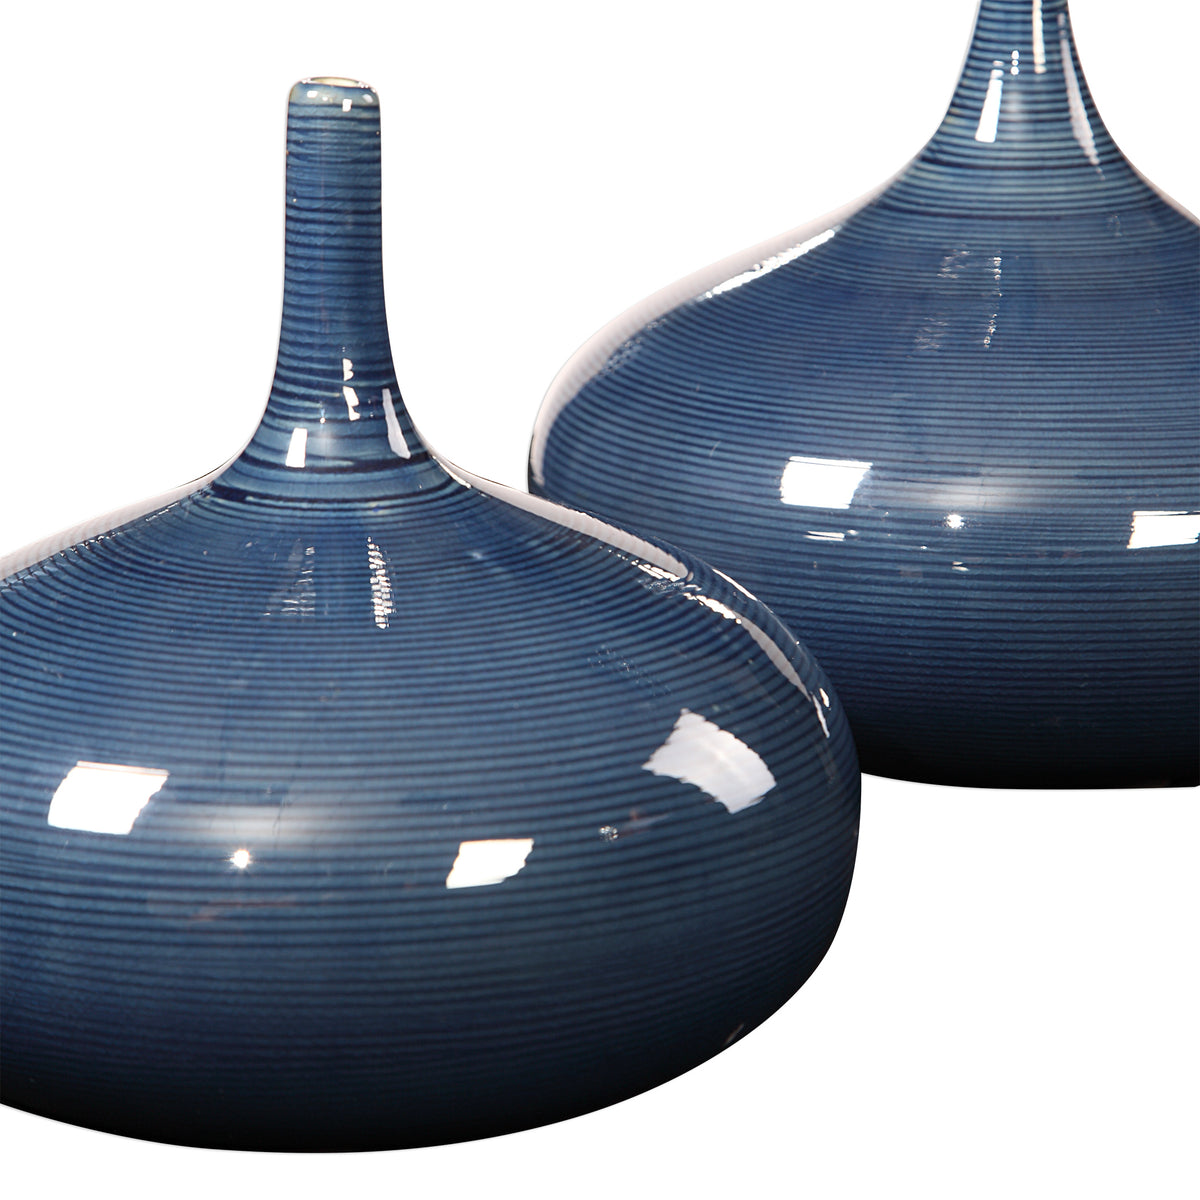 Zayan Blue Vases, S/2